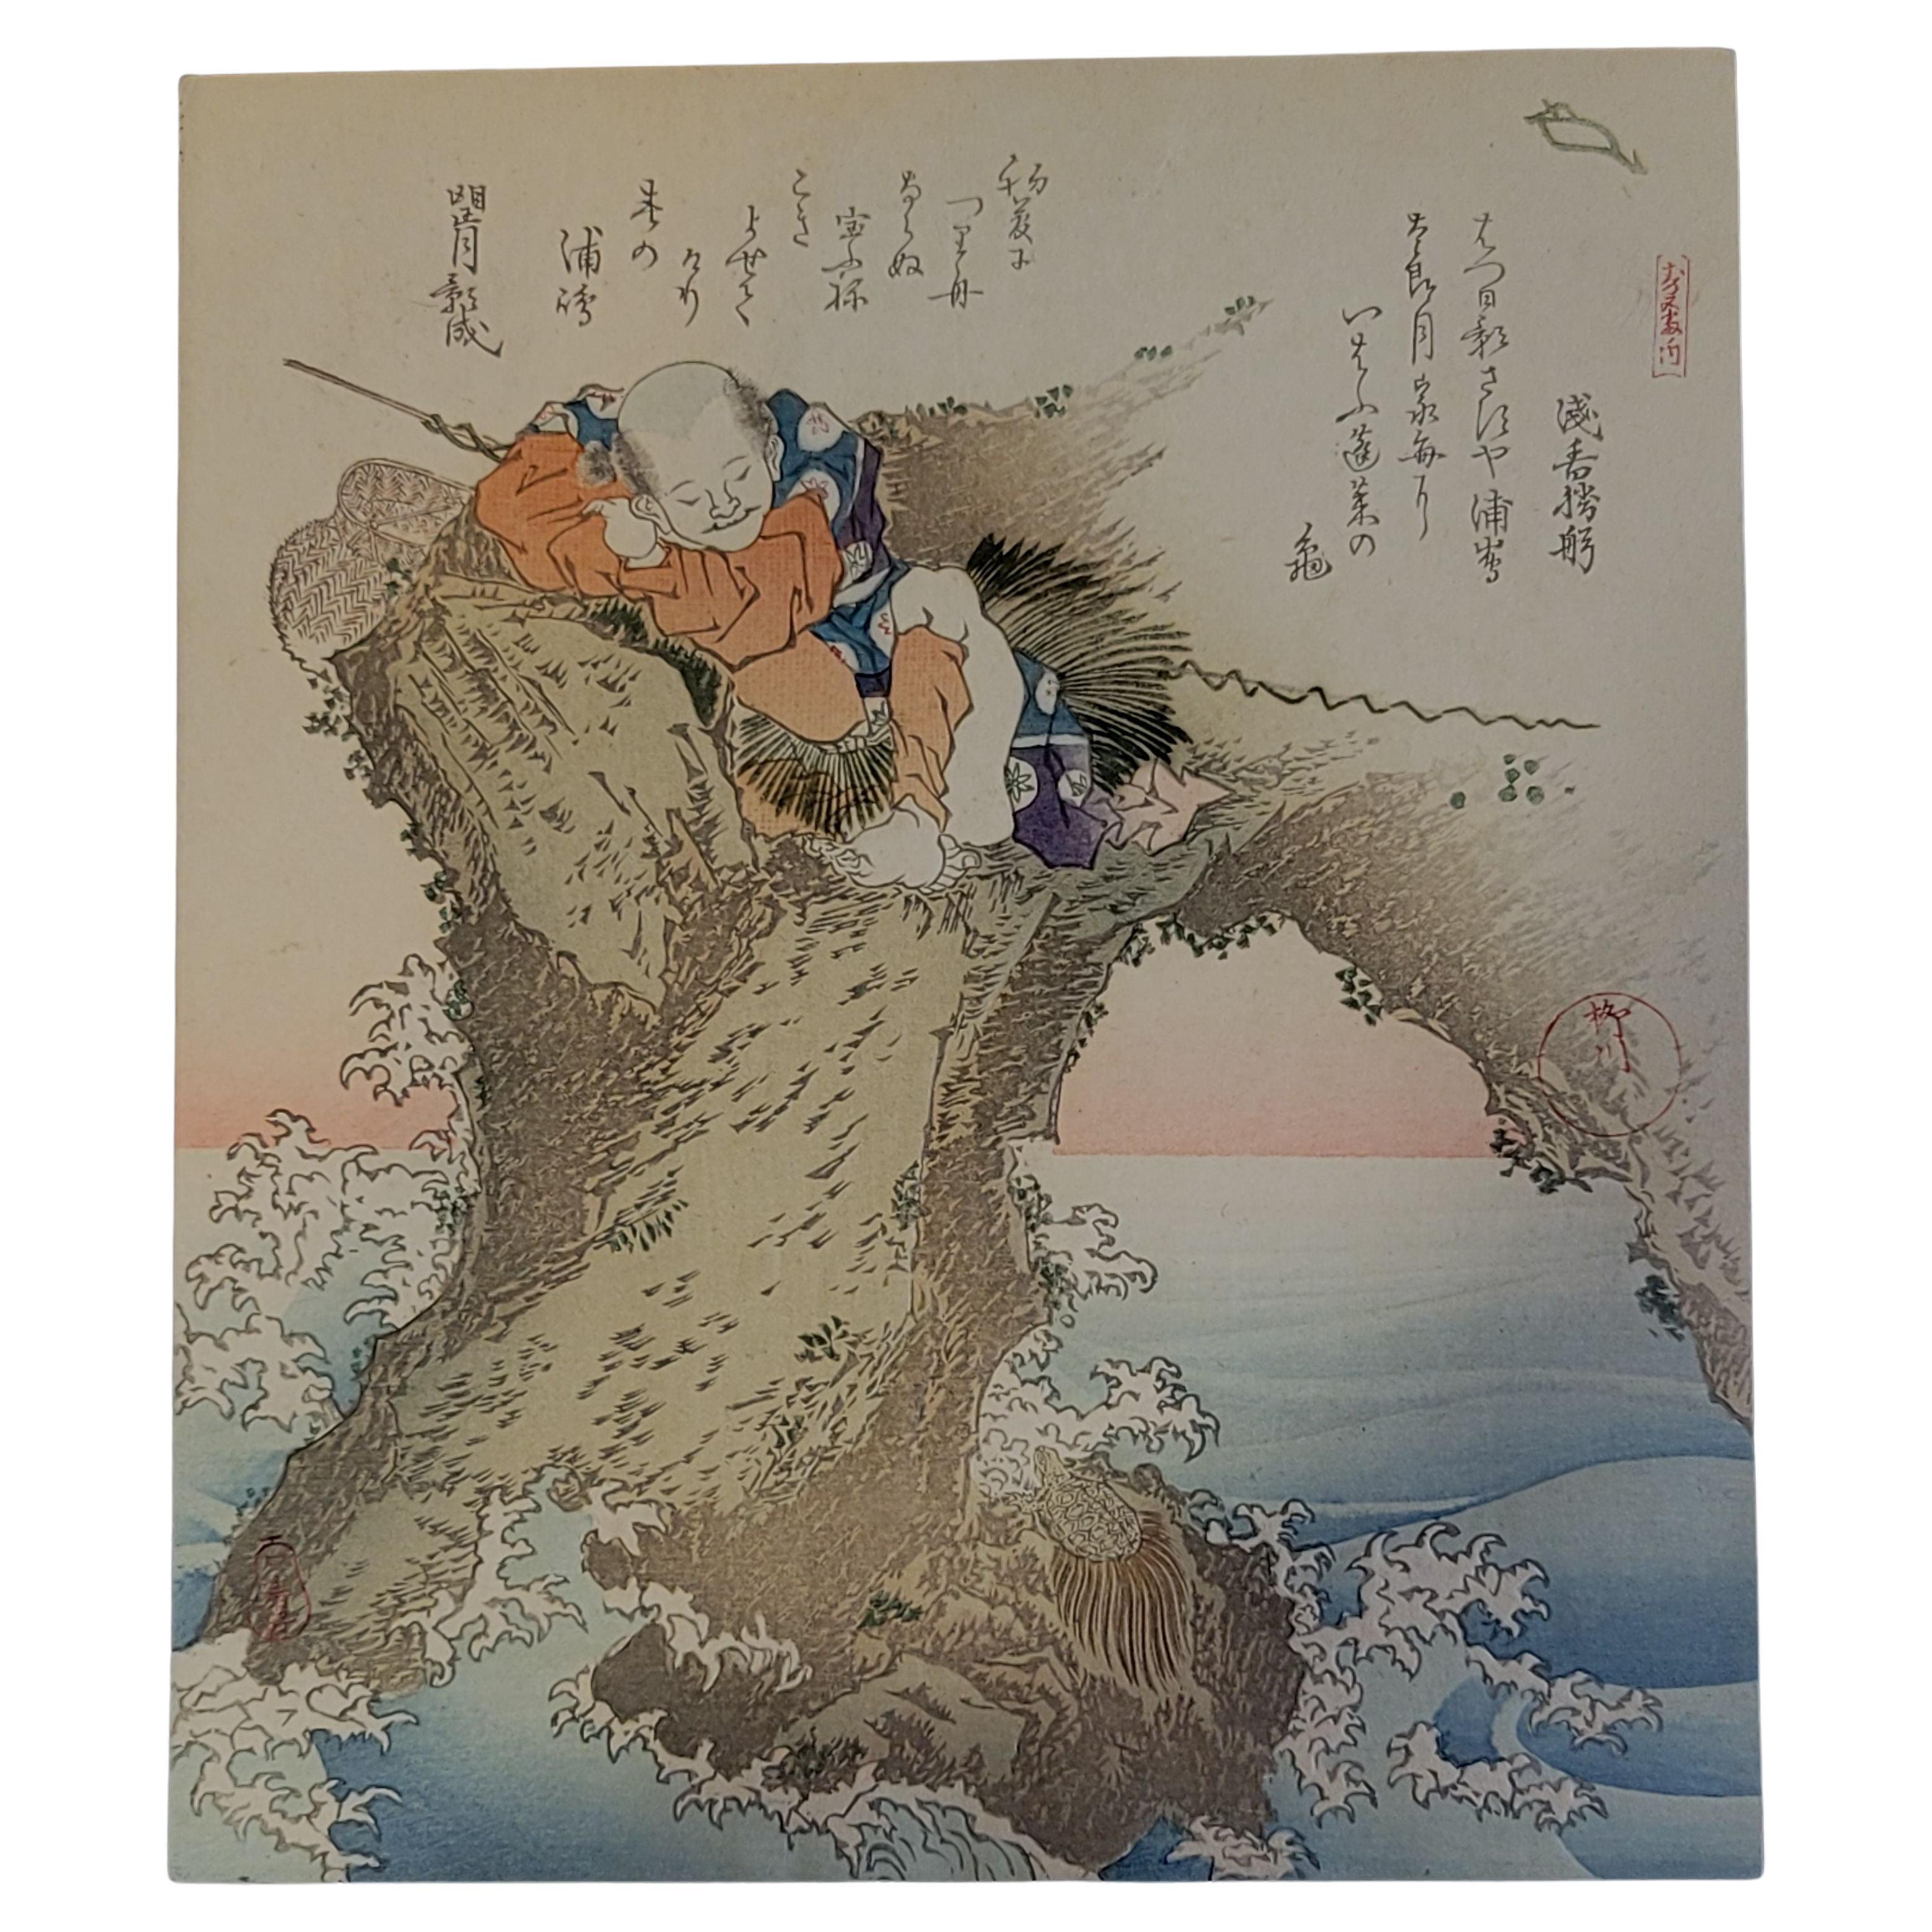 Japanese Woodblock Print by Yanagawa Shigenobu 柳川重信